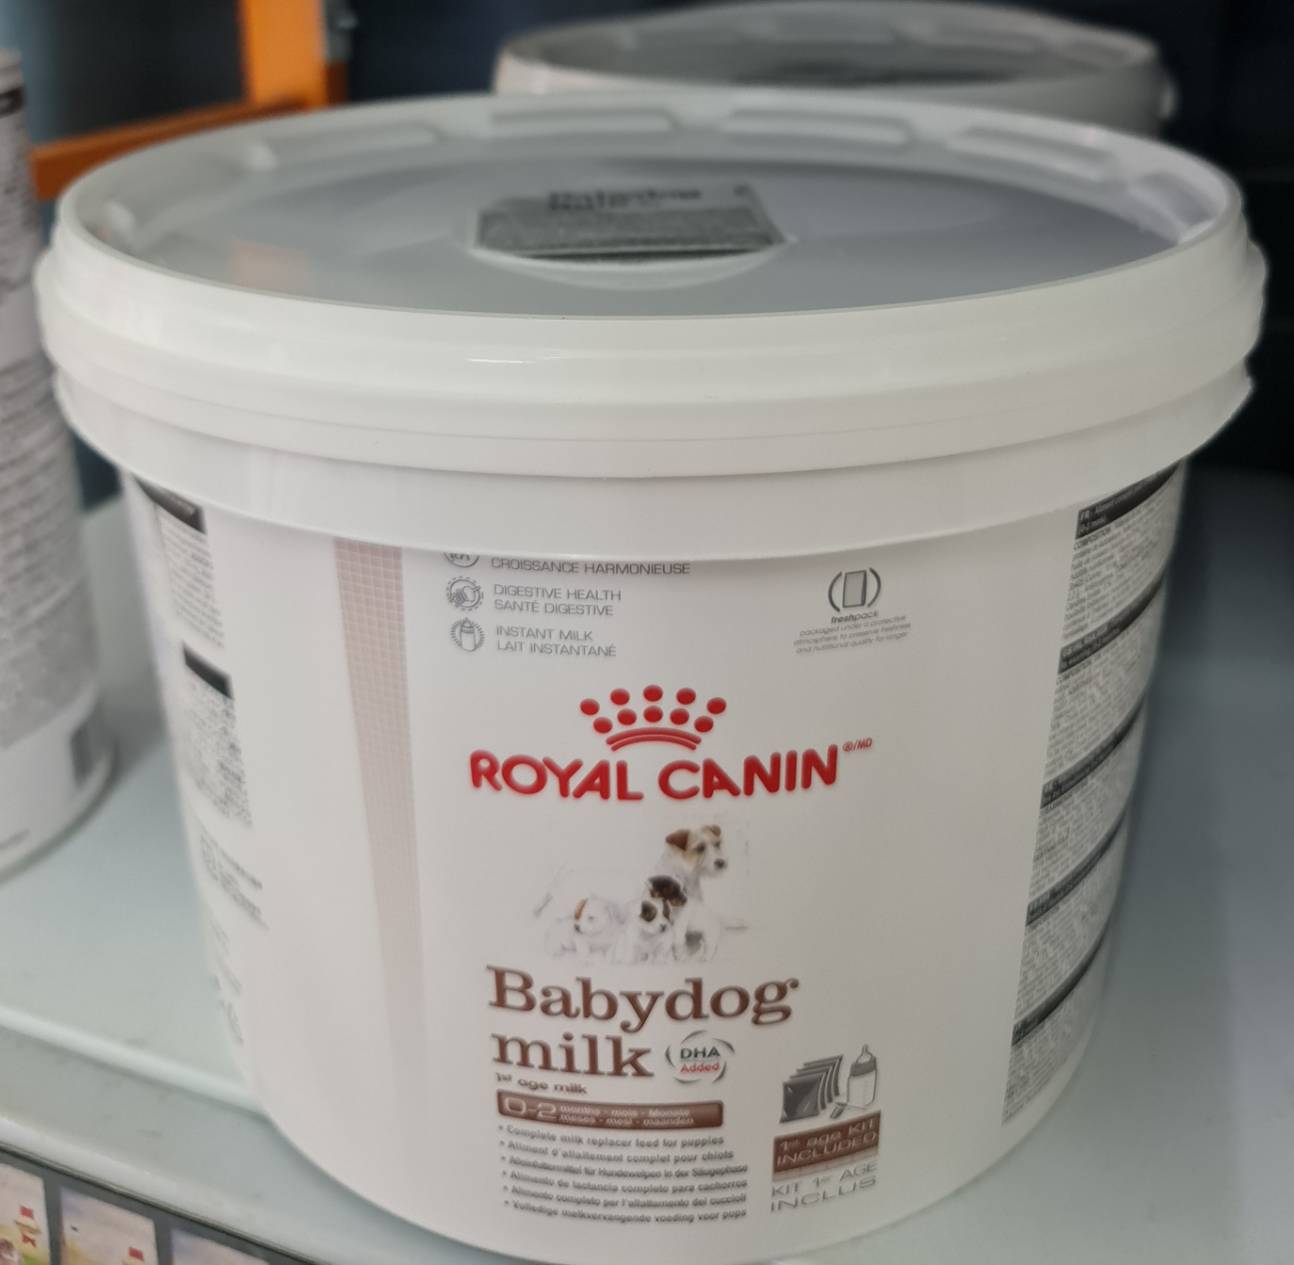 Royal Canin Babydog Milk 2kg (13/04/22) - นม โรยัล คานิน นมผง สำหรับสุนัข ขนาด 2 กิโลกรัม